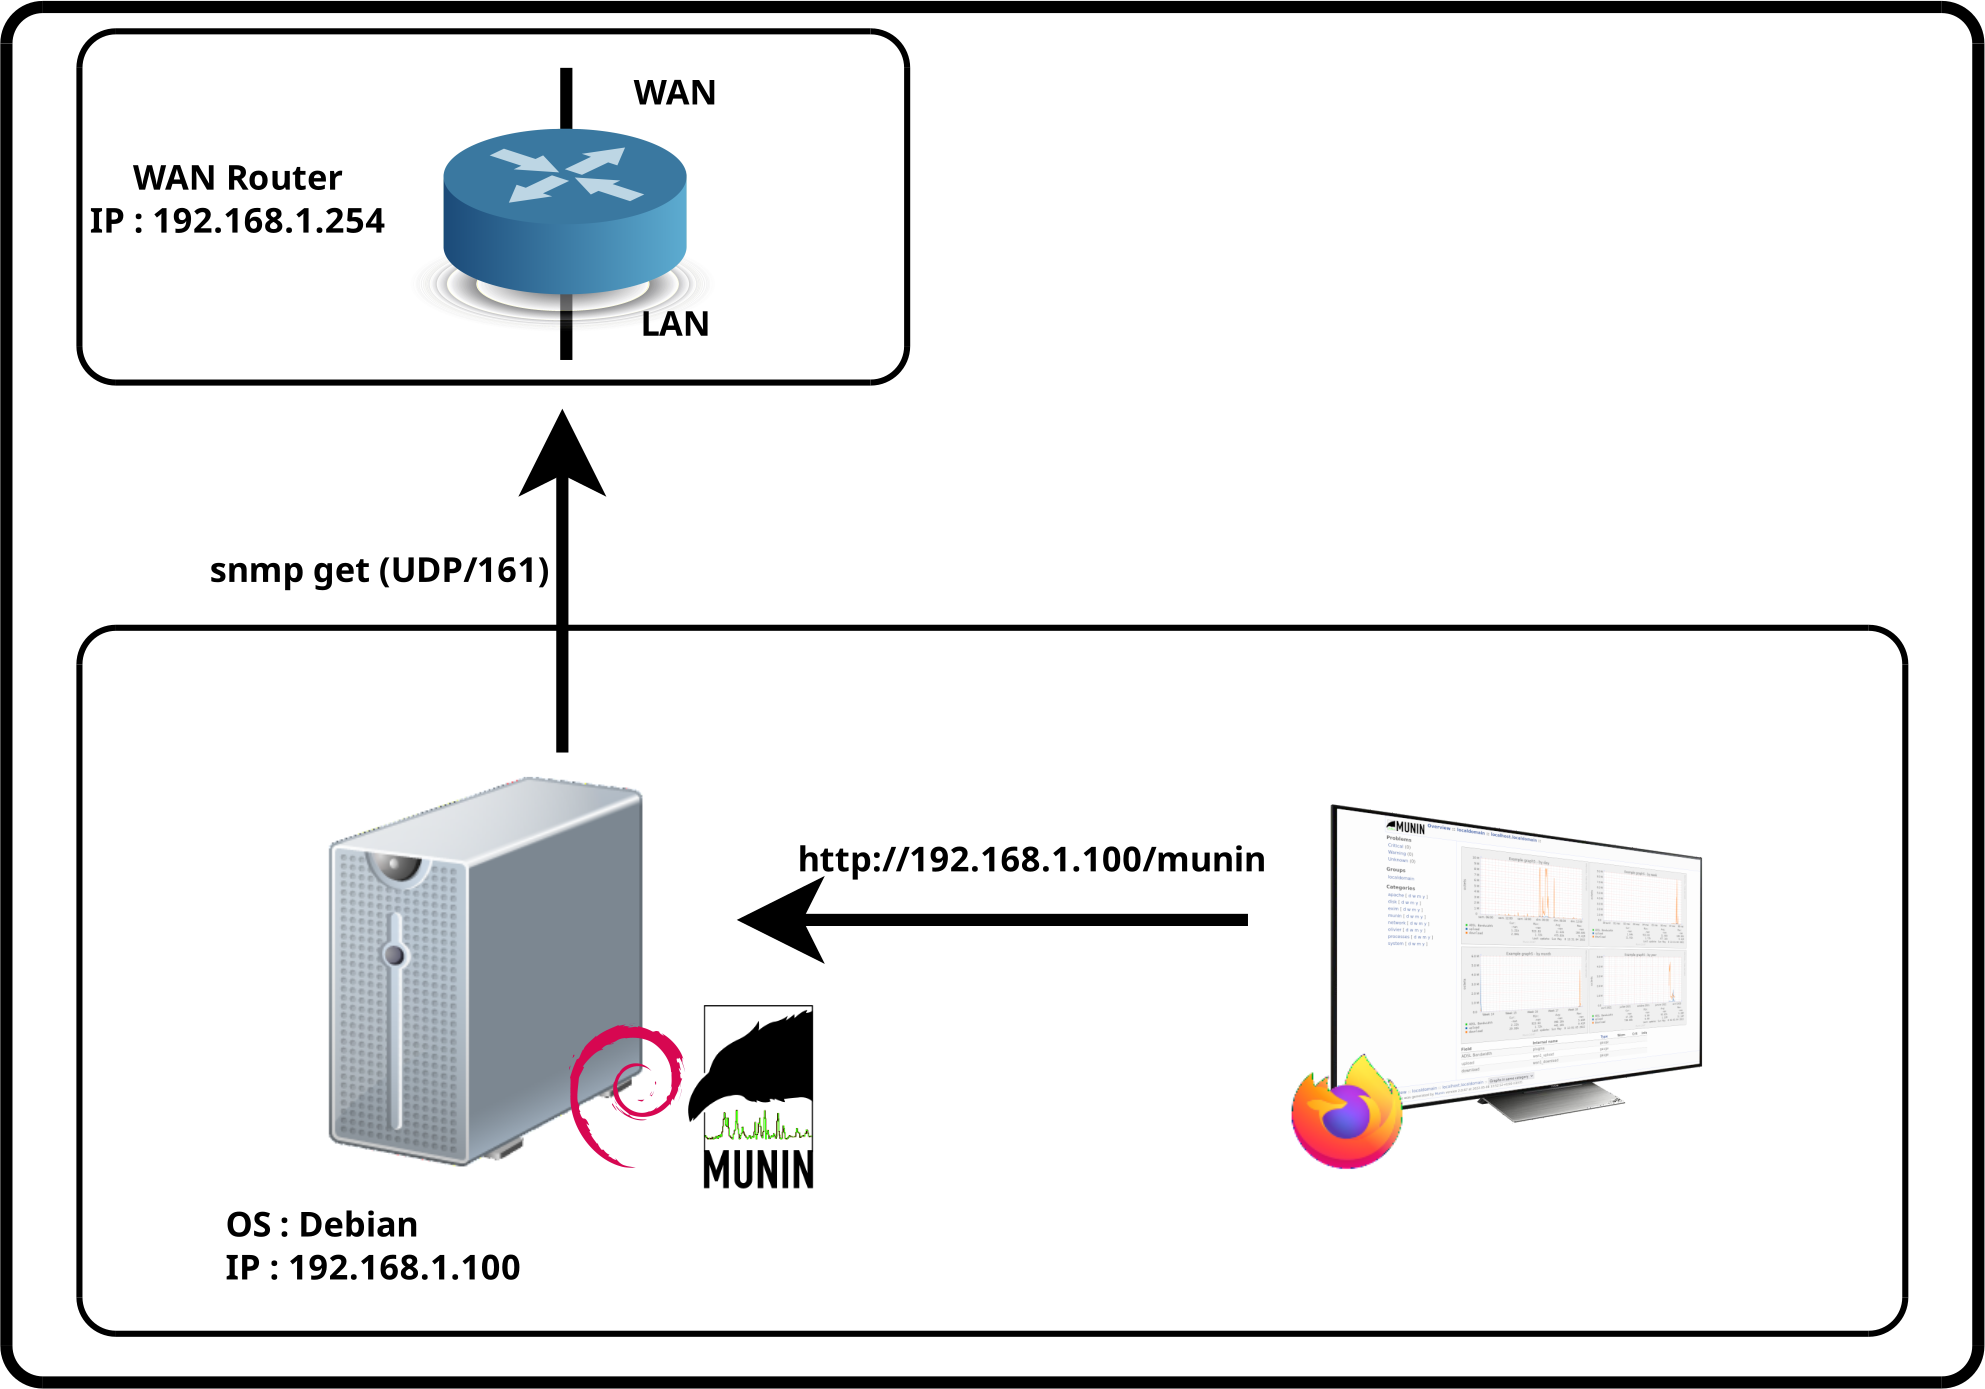 Munin architecture to monitor bandwidth WAN via SNMP